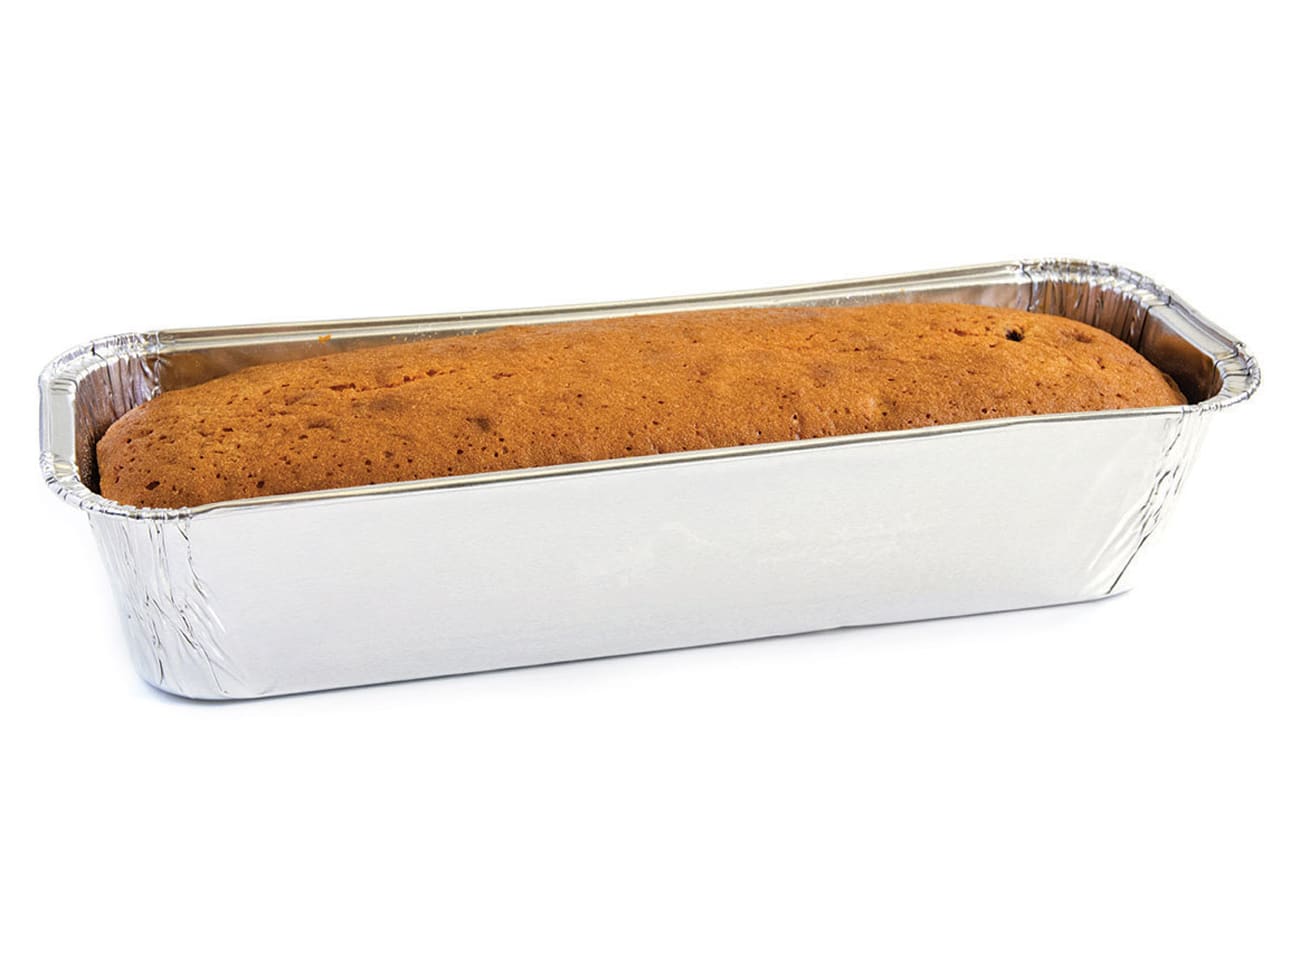 Moule à cake (x 100) - aluminium - 22,4 x 8,4 x ht 7 cm - Mallard Ferrière  - Meilleur du Chef